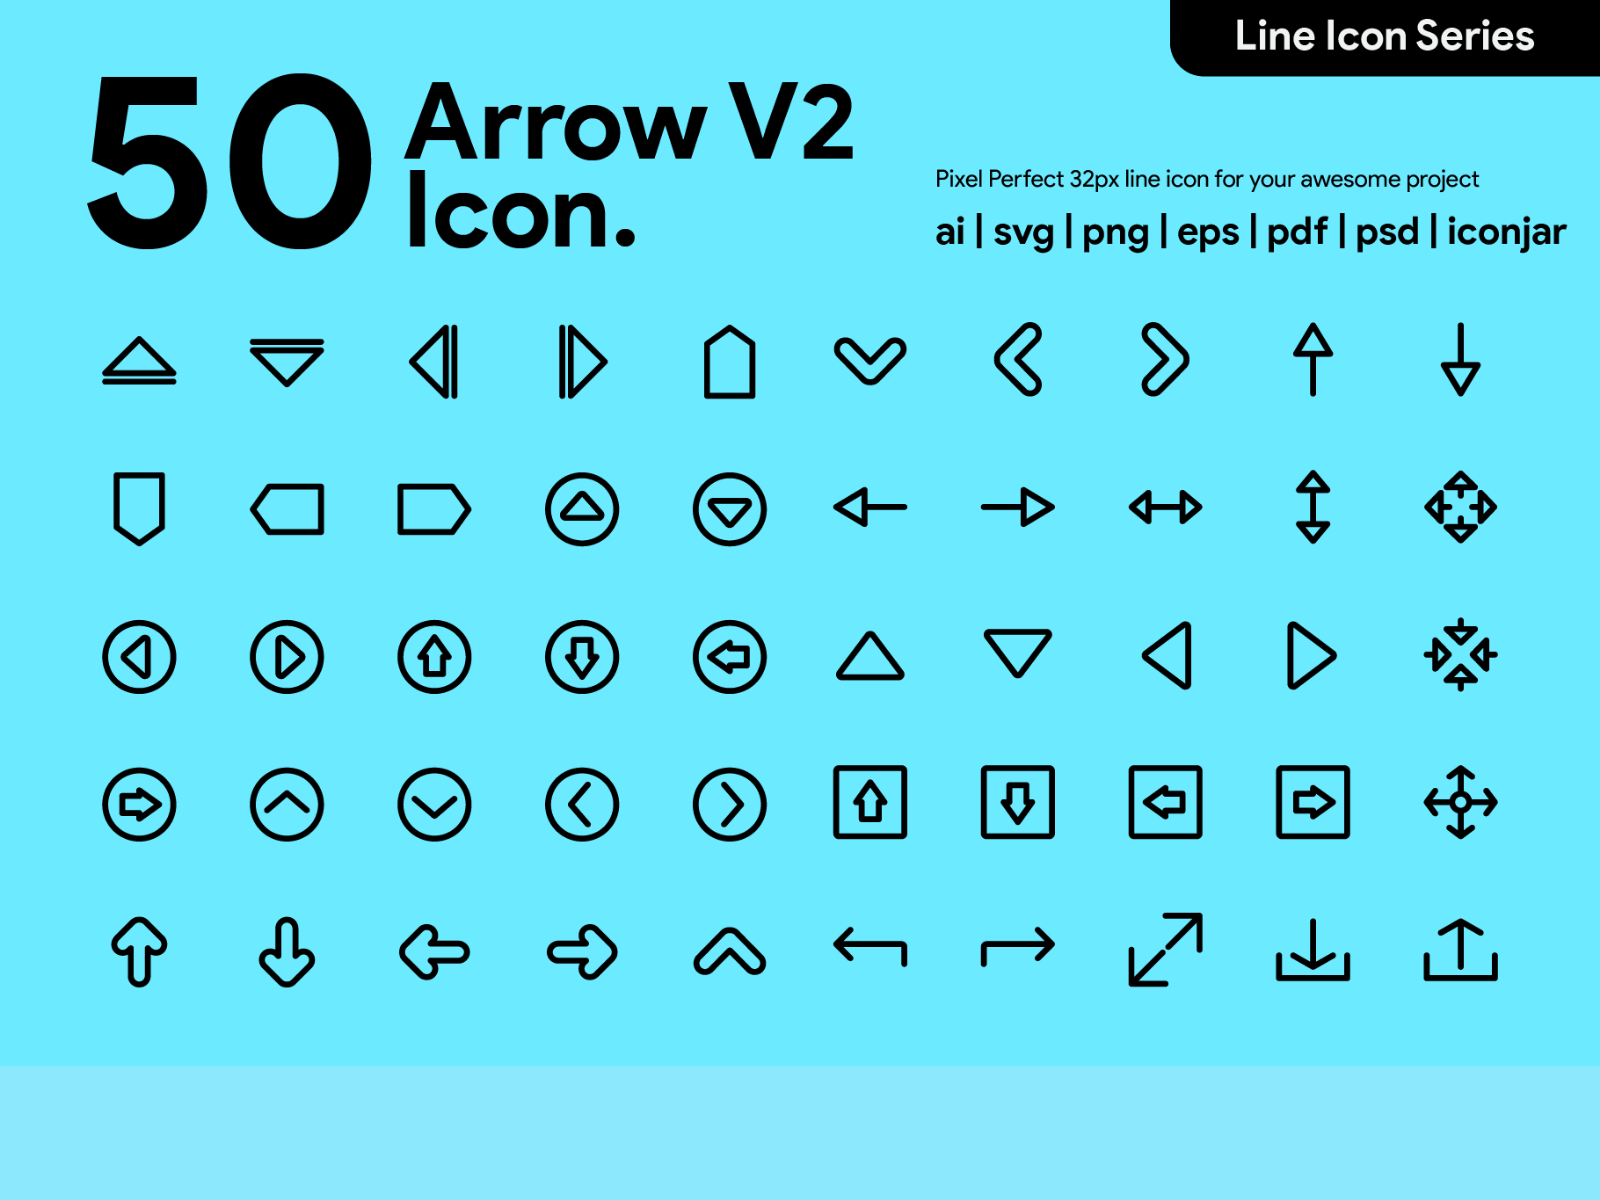 App icons design idea #242: Kawaicon - 50 Arrow Line Icon